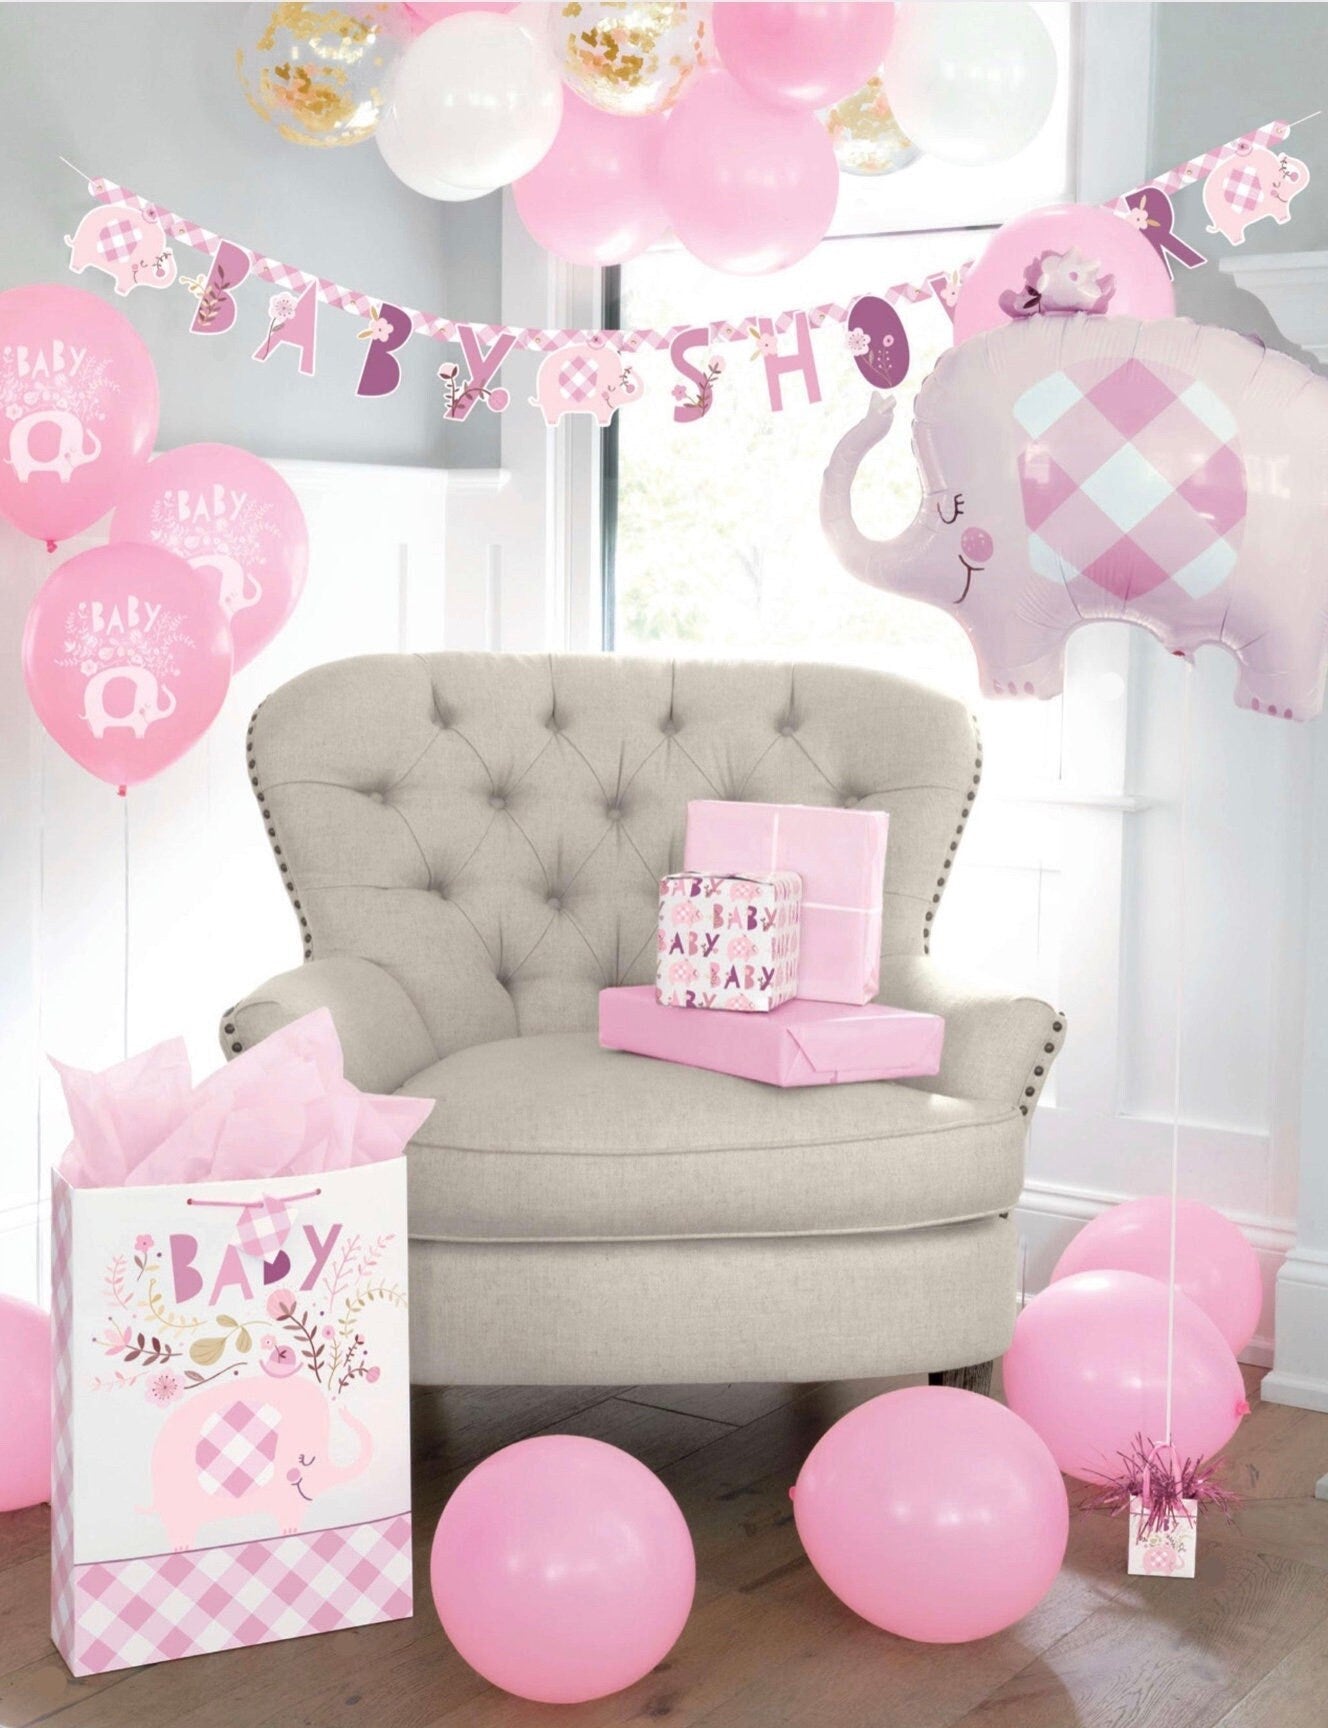 Pink Elephant Balloon - Stesha Party